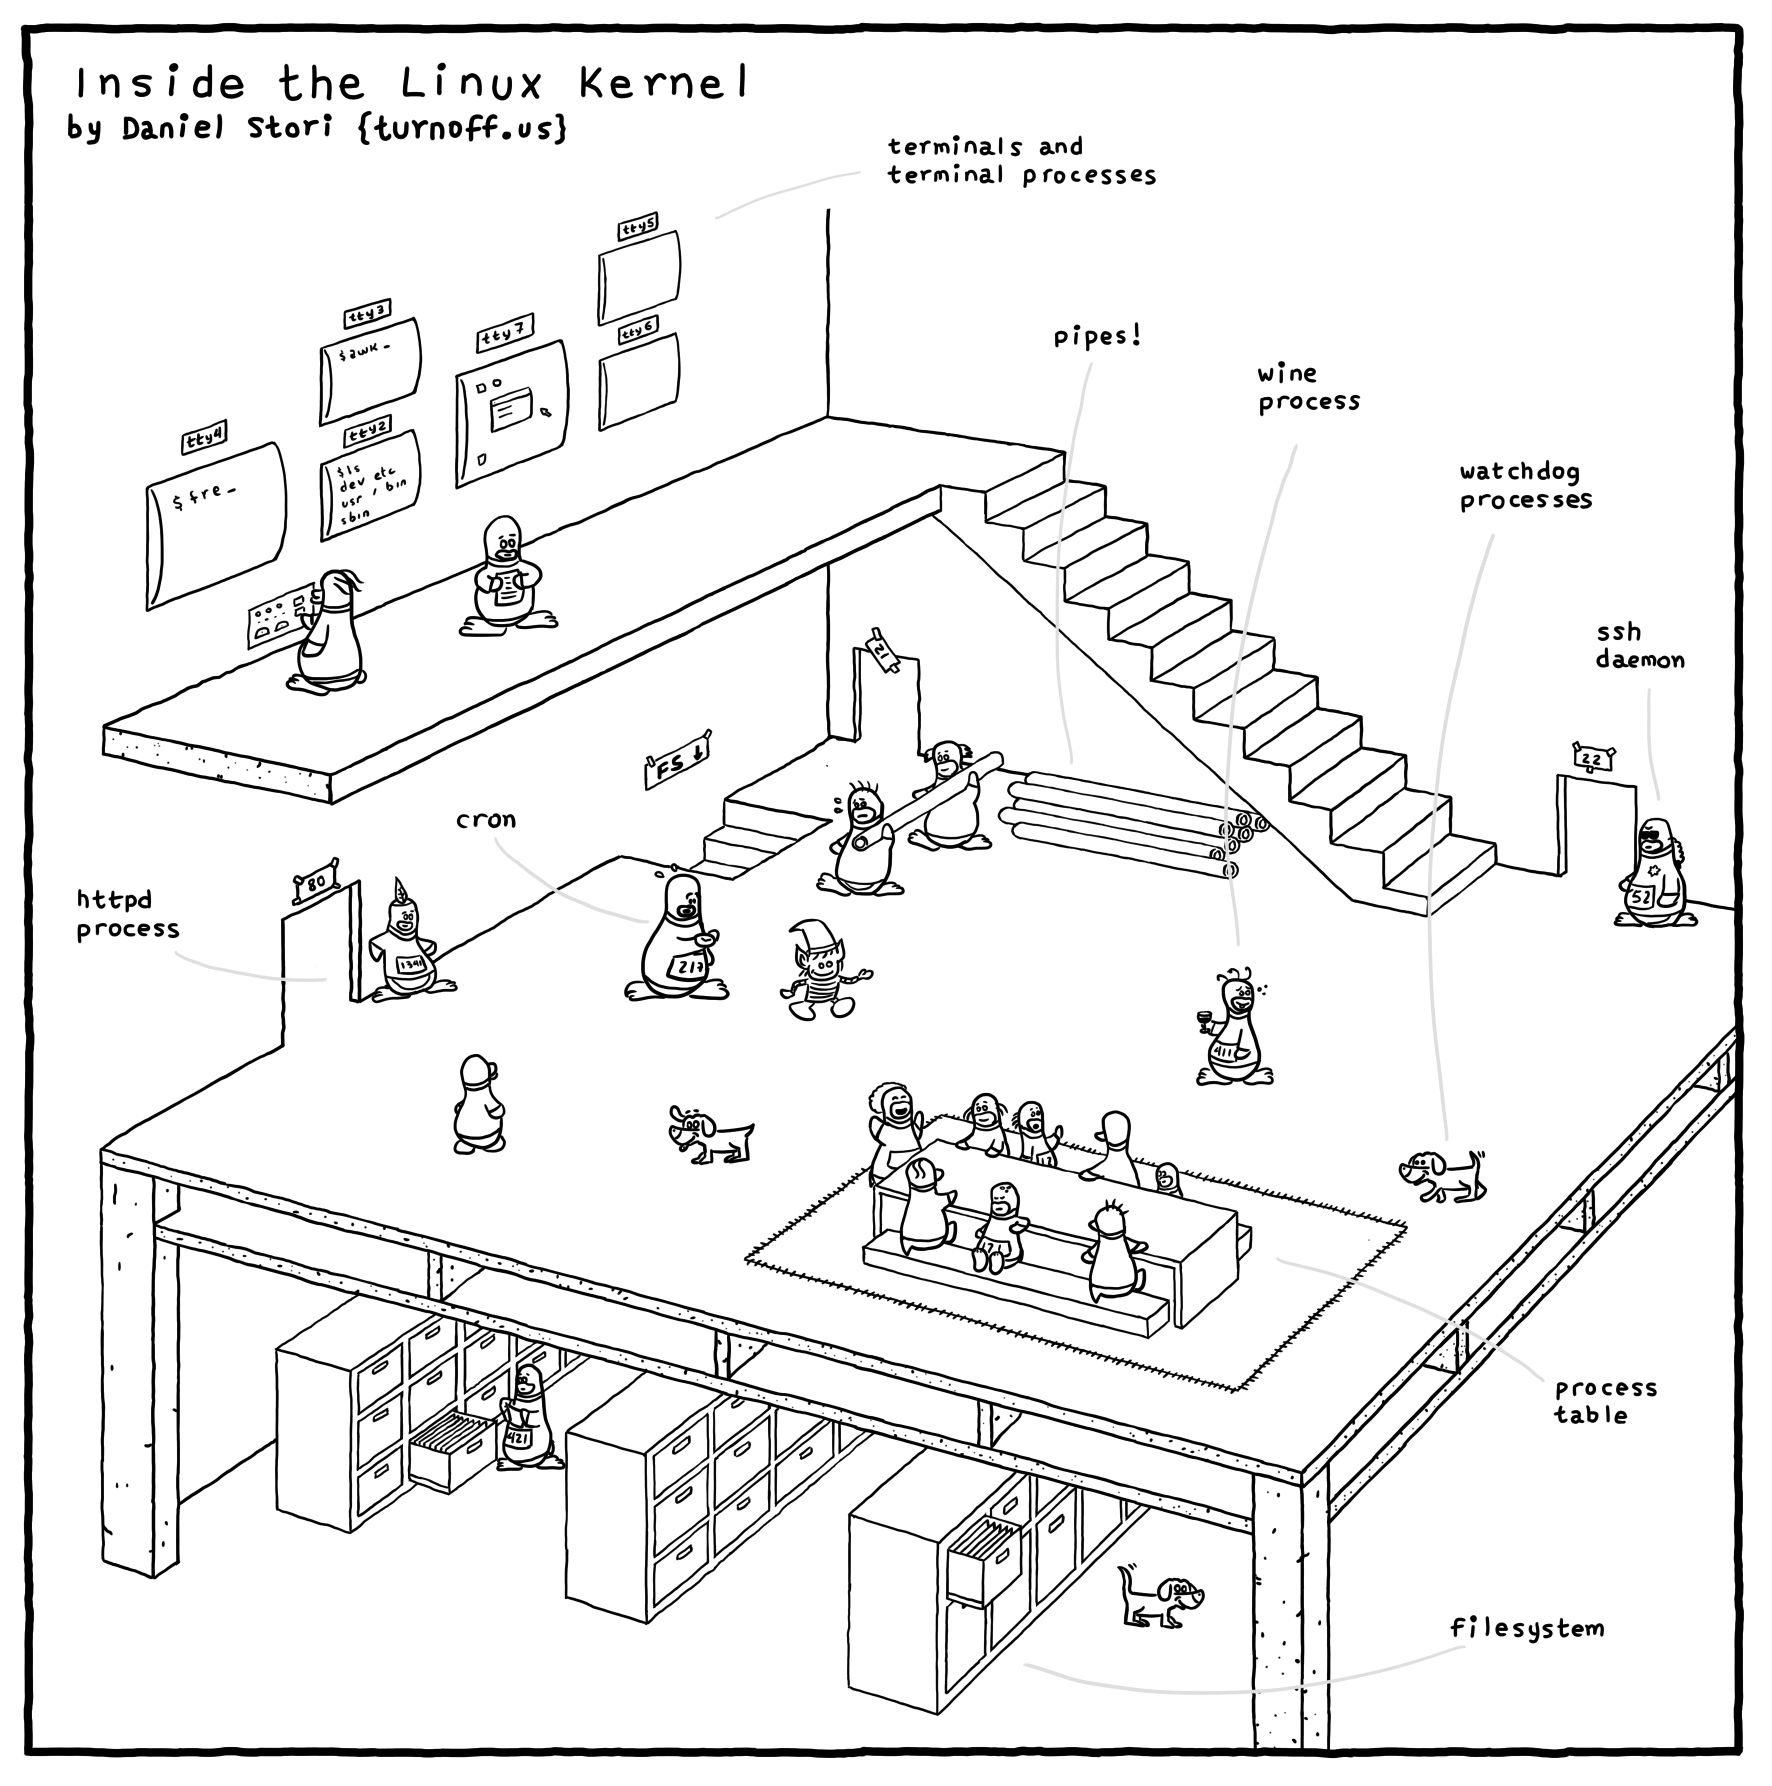 inside the linux kernel geek comic